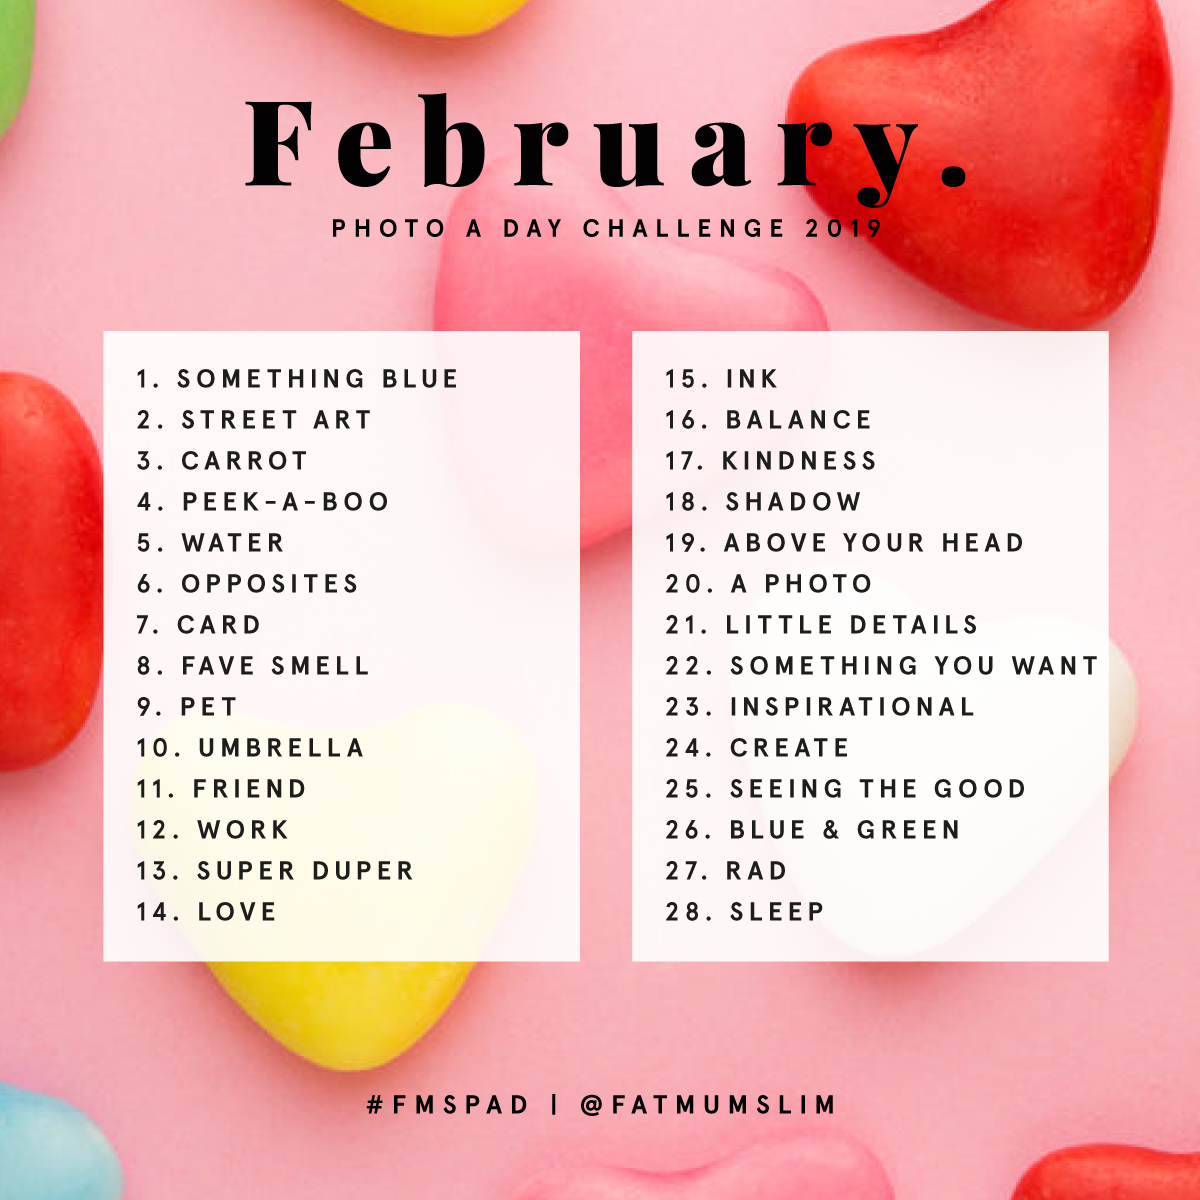 February Photo A Day Challenge 2019 - Fat Mum Slim